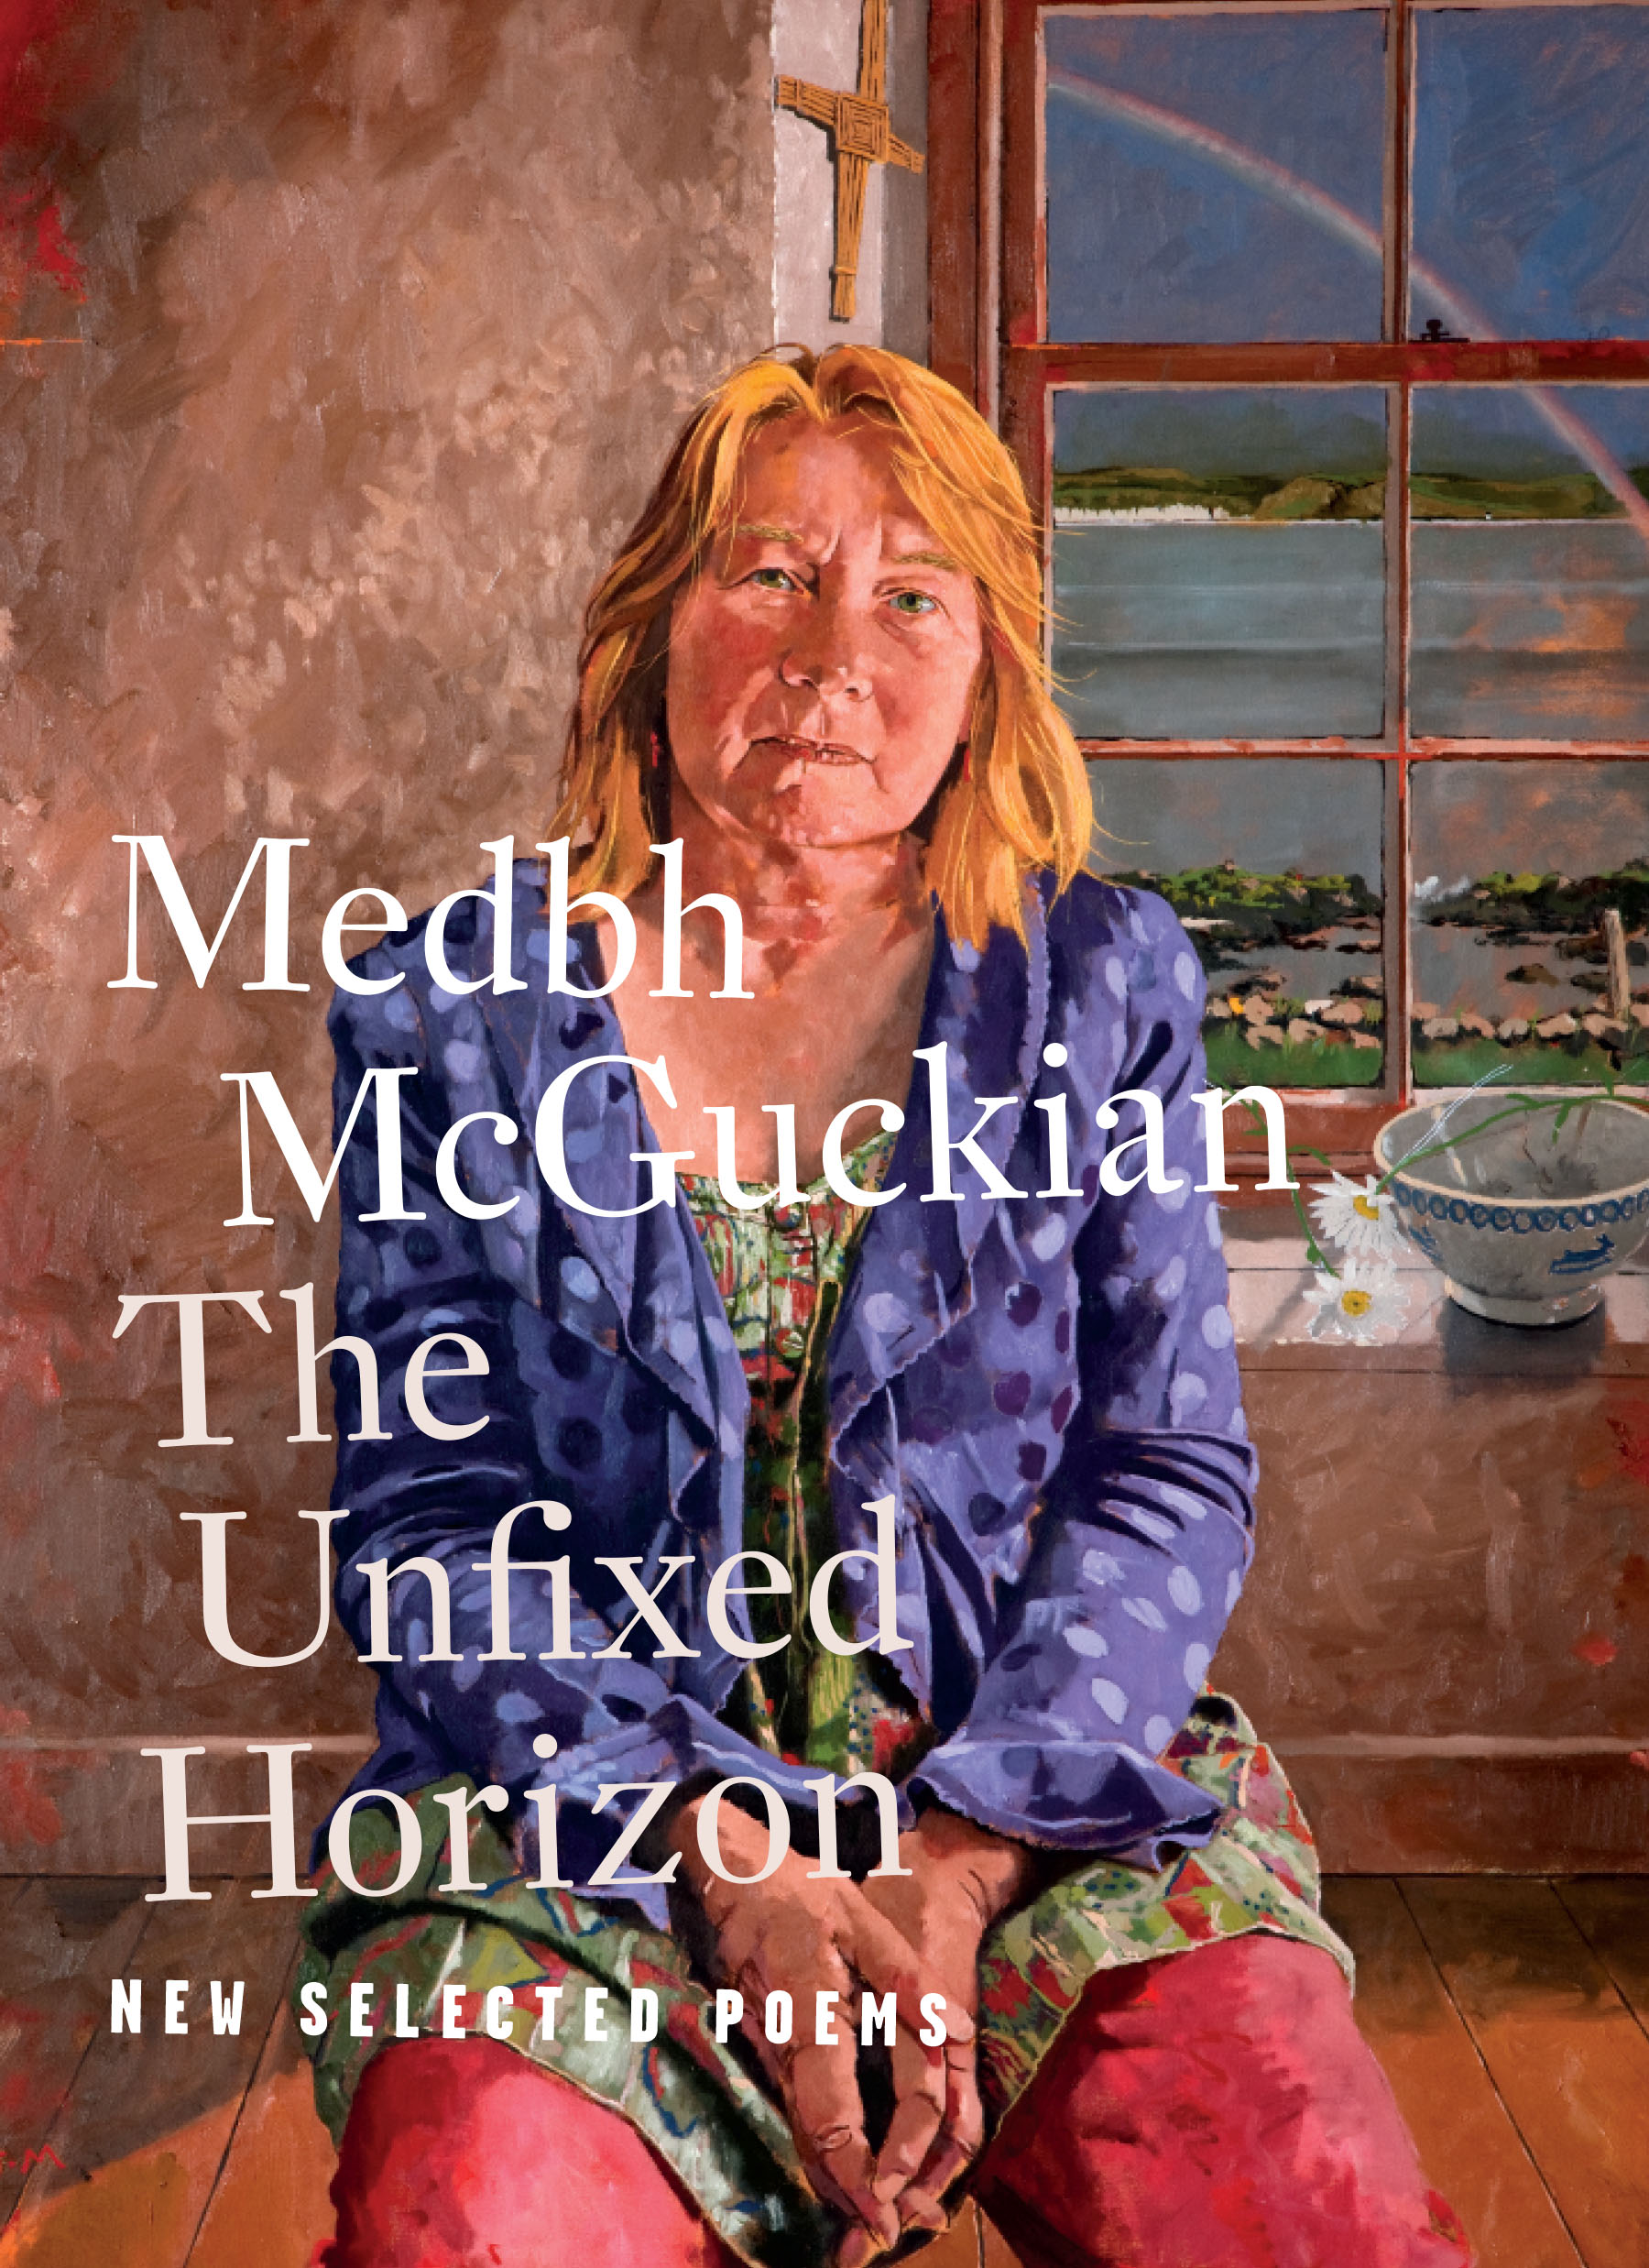 Cover of Medbh McGuckian's book The Unfixed Horizon.